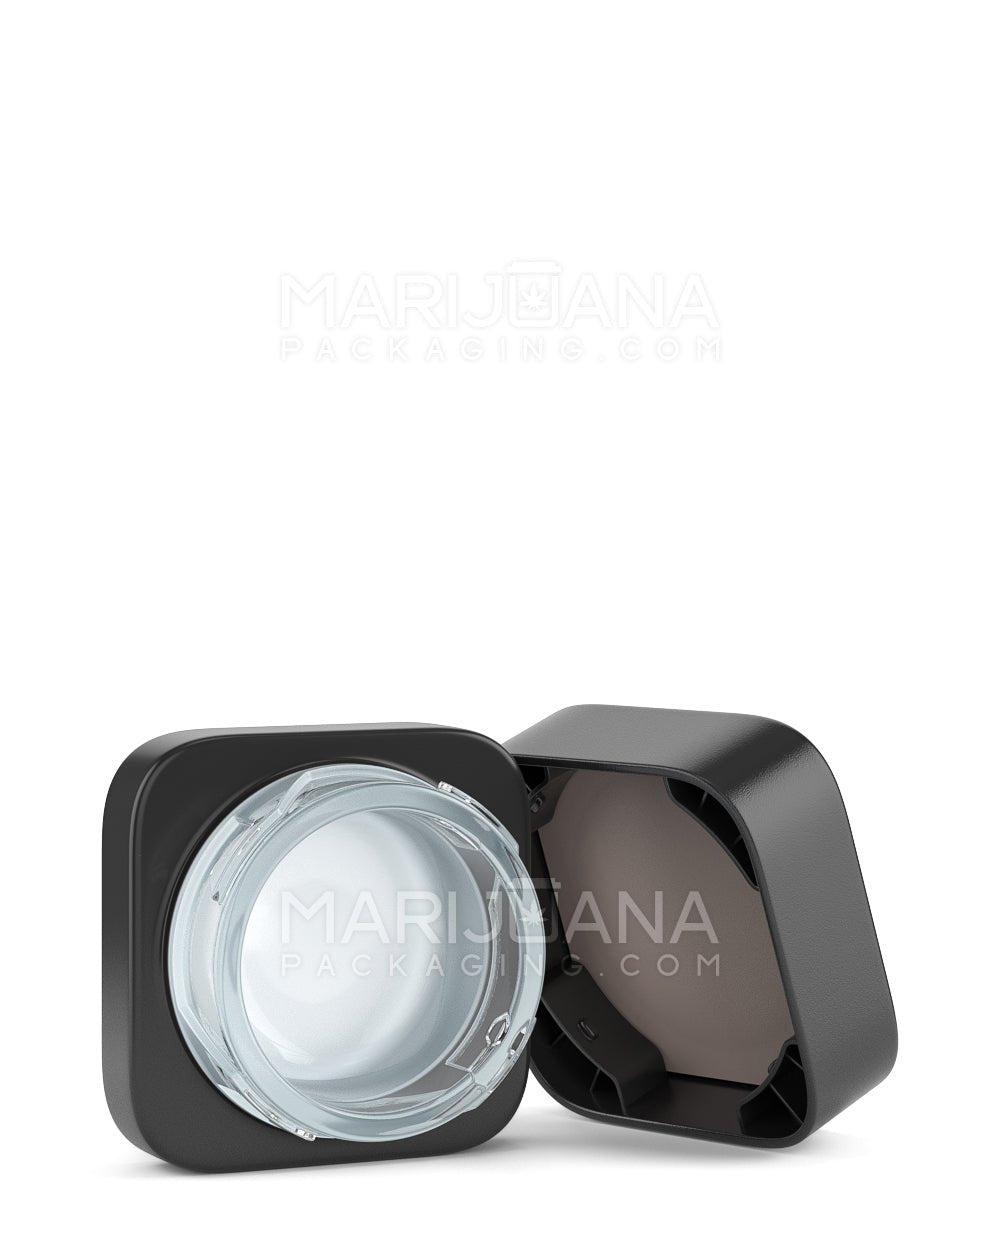 Child Resistant | Qube Black Glass Concentrate Jar w/ White Interior & Black Cap | 32mm - 5mL - 250 Count - 1